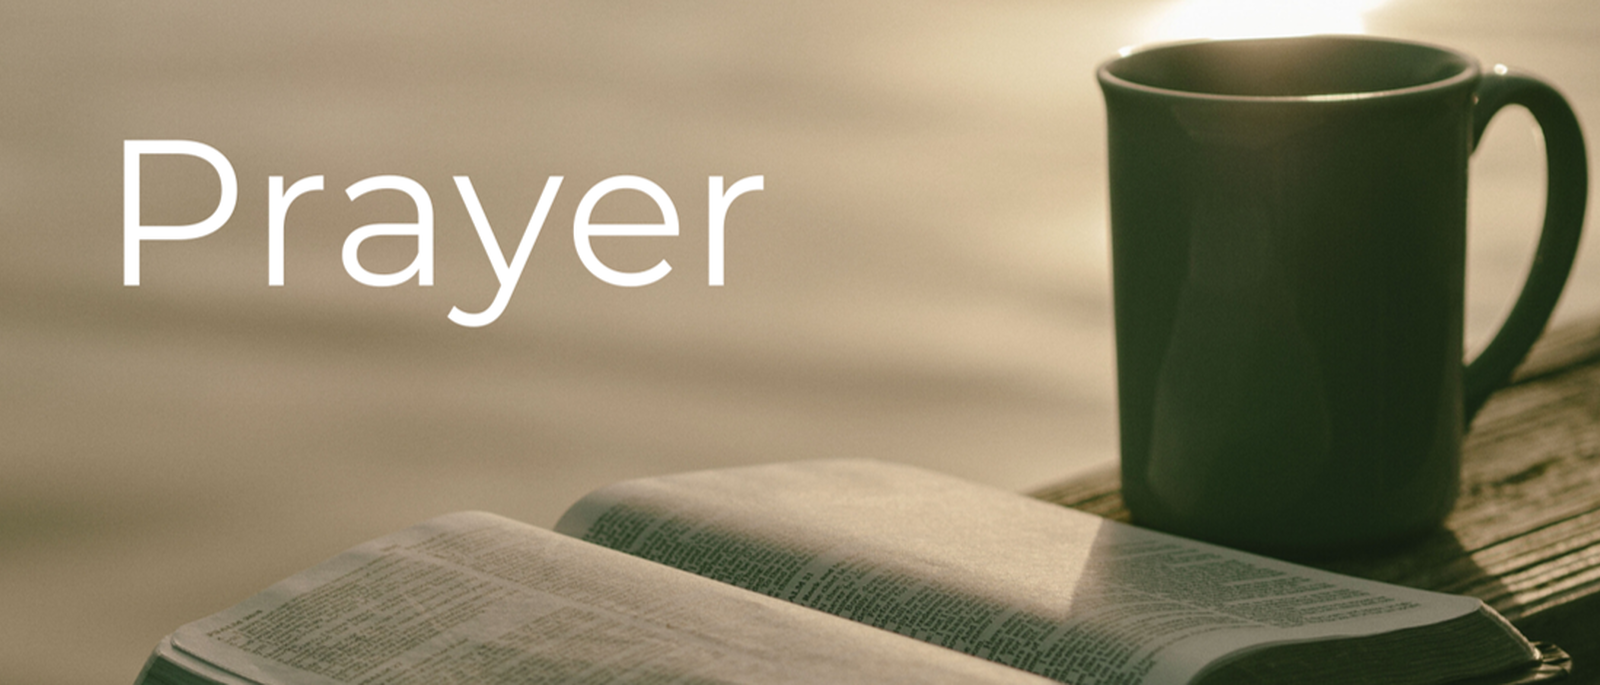 Prayer banner 001